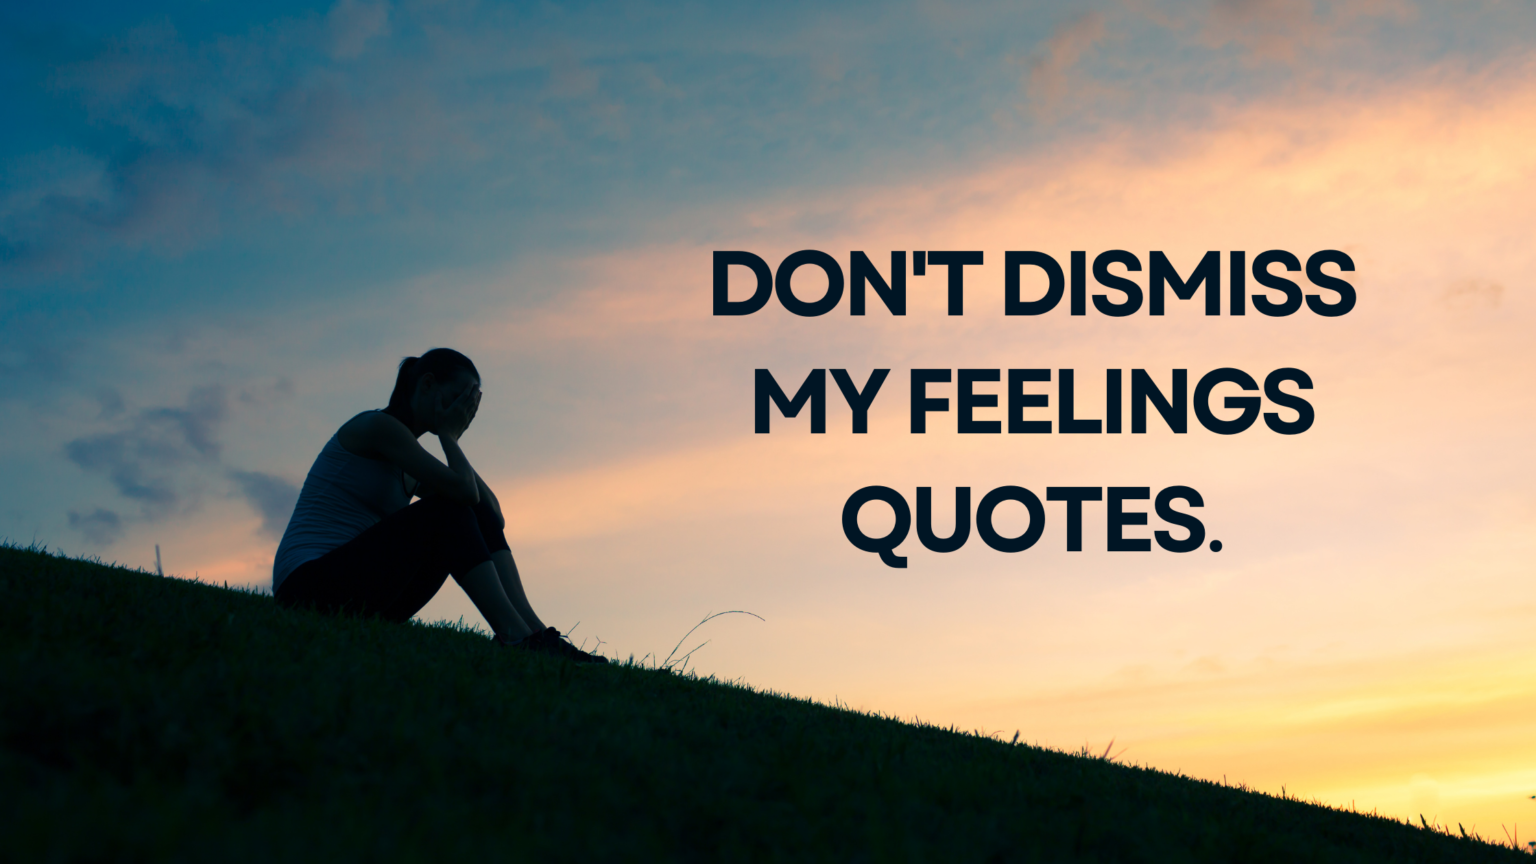 Don't Dismiss My Feelings Quotes. - Demands Jobs.com